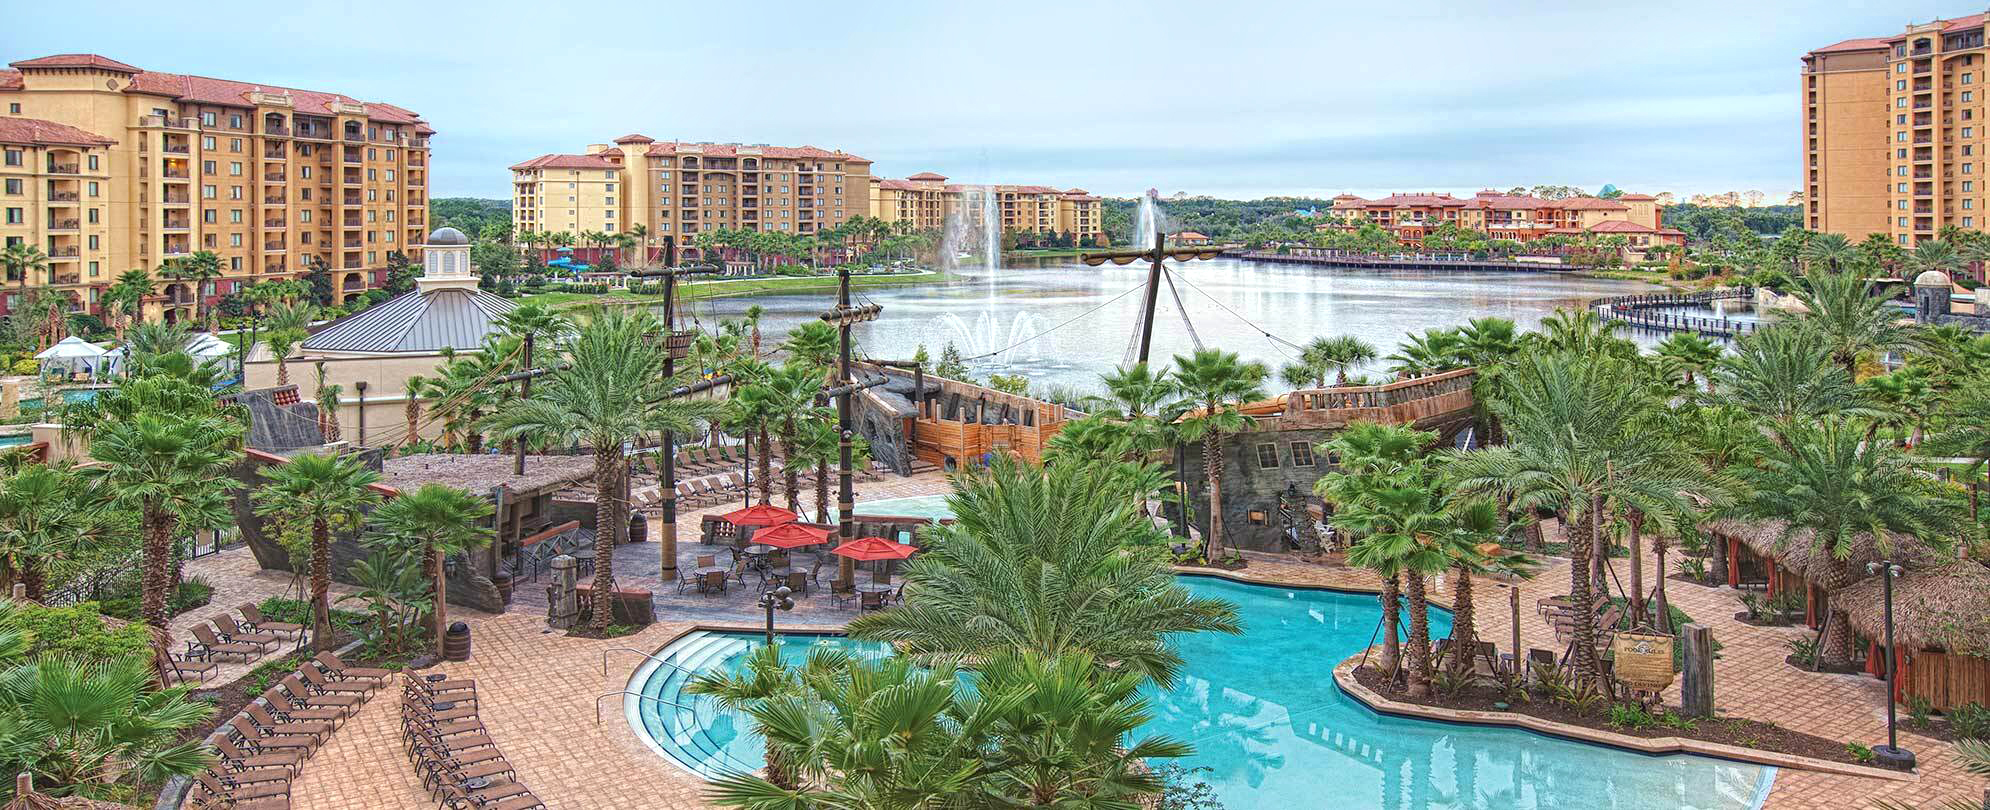 View of lake, pool, and pirate ship at Club Wyndham Bonnet Creek resort in Orlando, Florida.